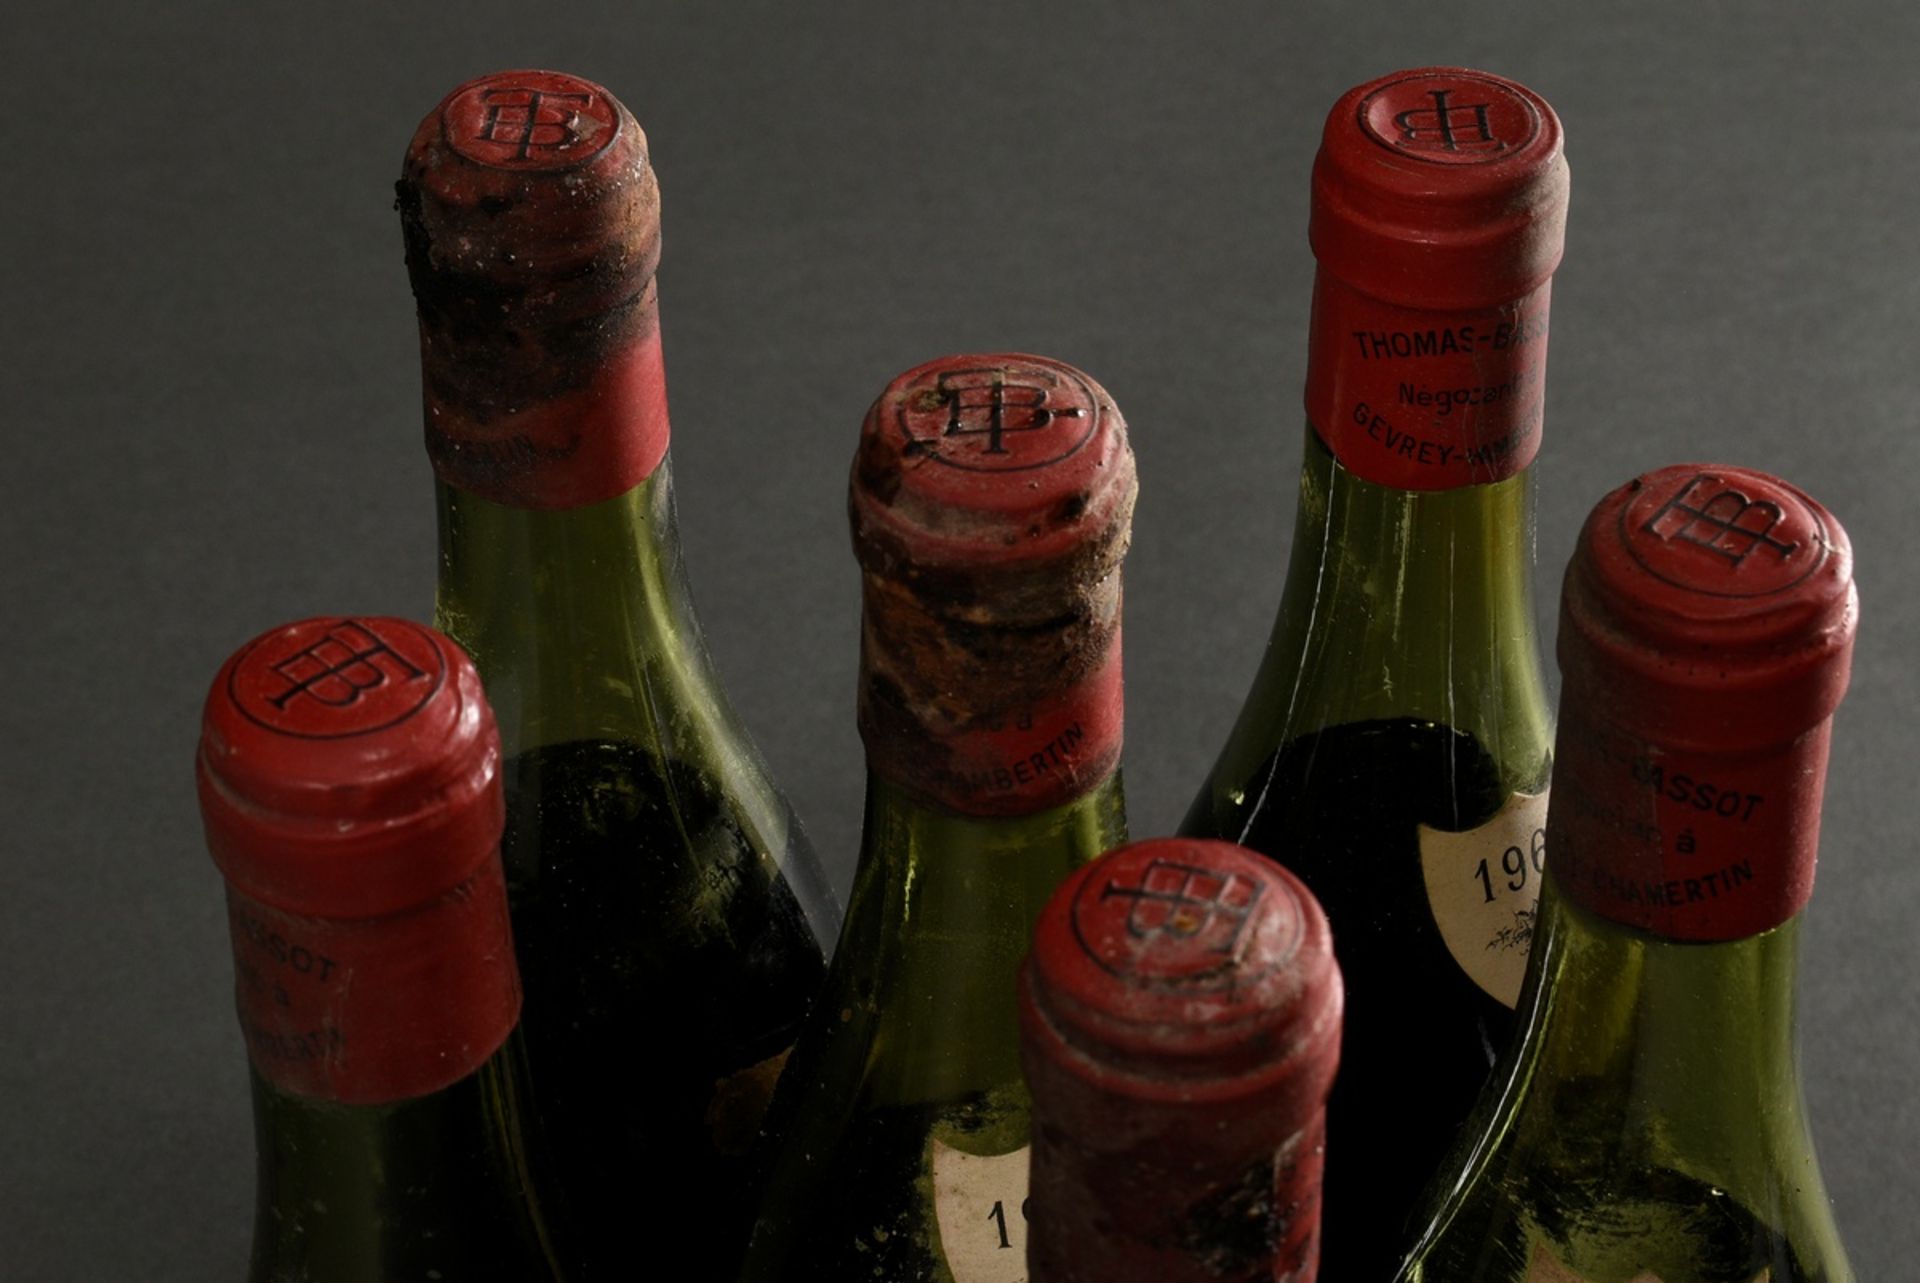 6 Flaschen 1961 Vins fins de la Cote de Nuits, Maison Thomas Bassot, Gevrey-Chambertin, Rotwein, Bu - Bild 5 aus 5